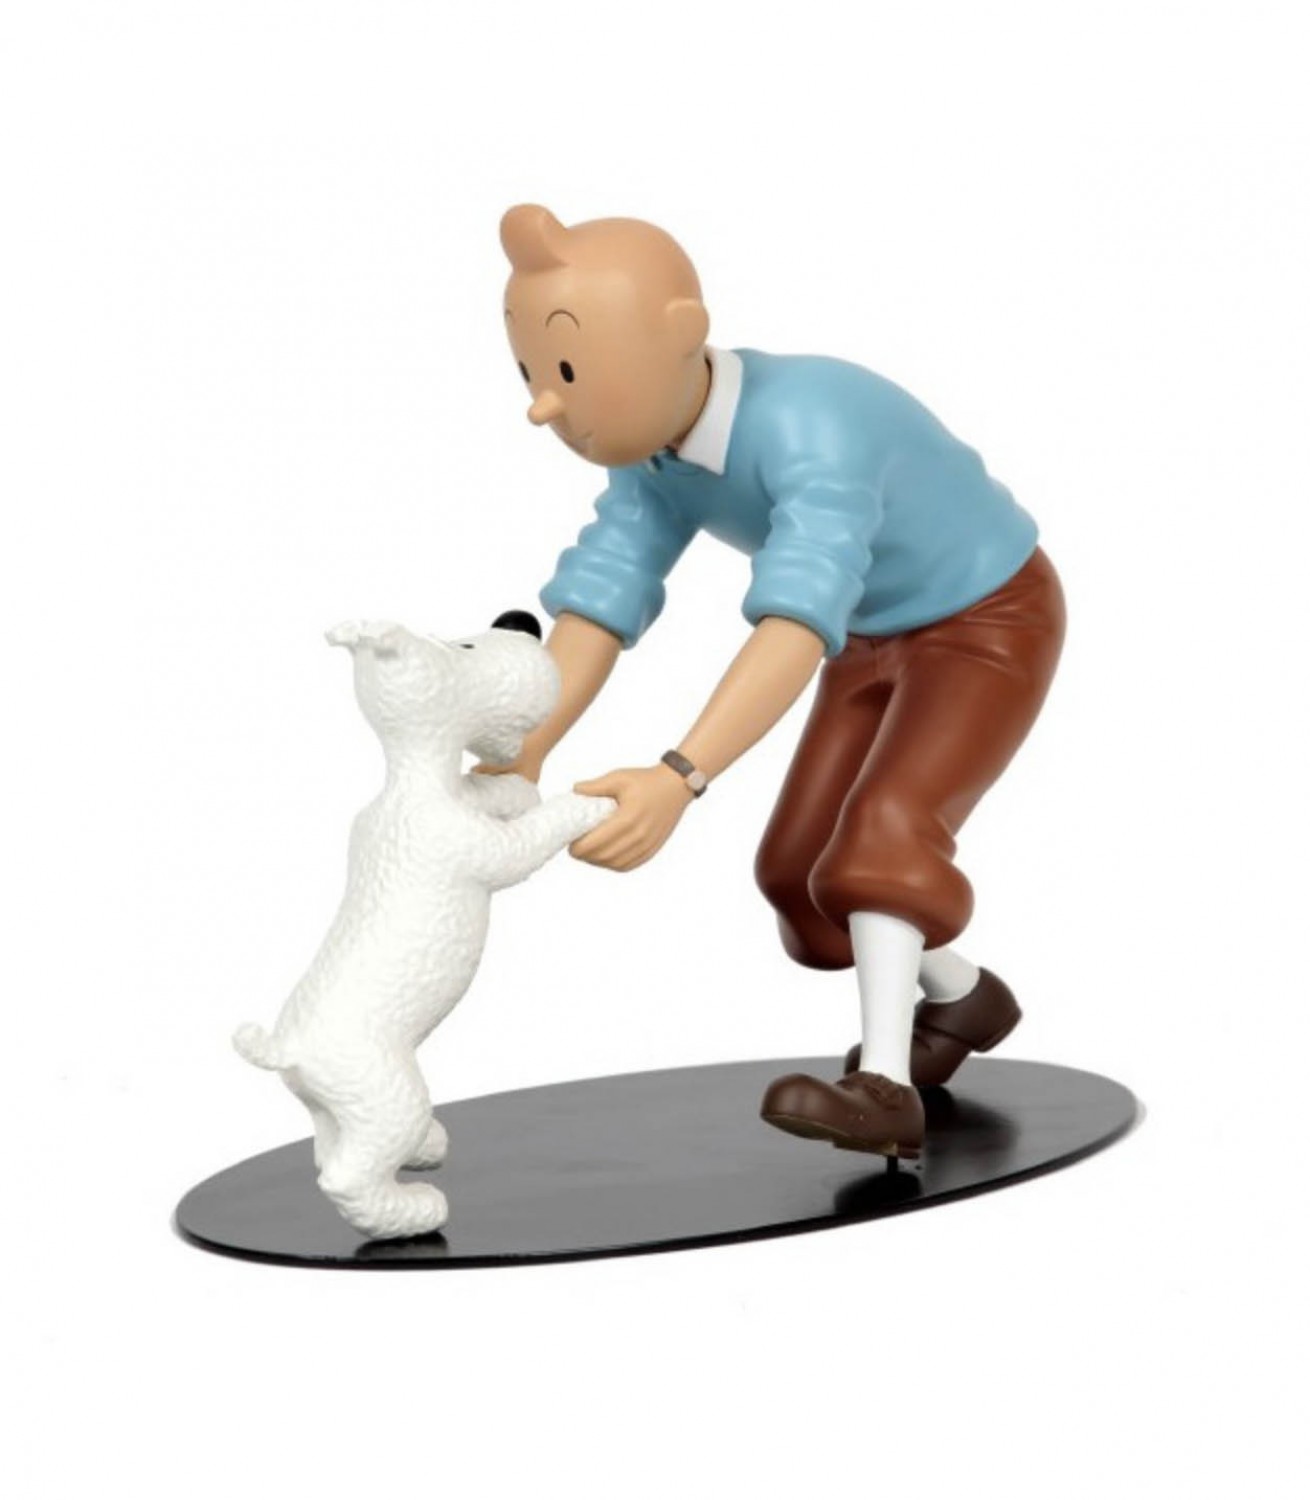 Tintin & Milou "La joie"